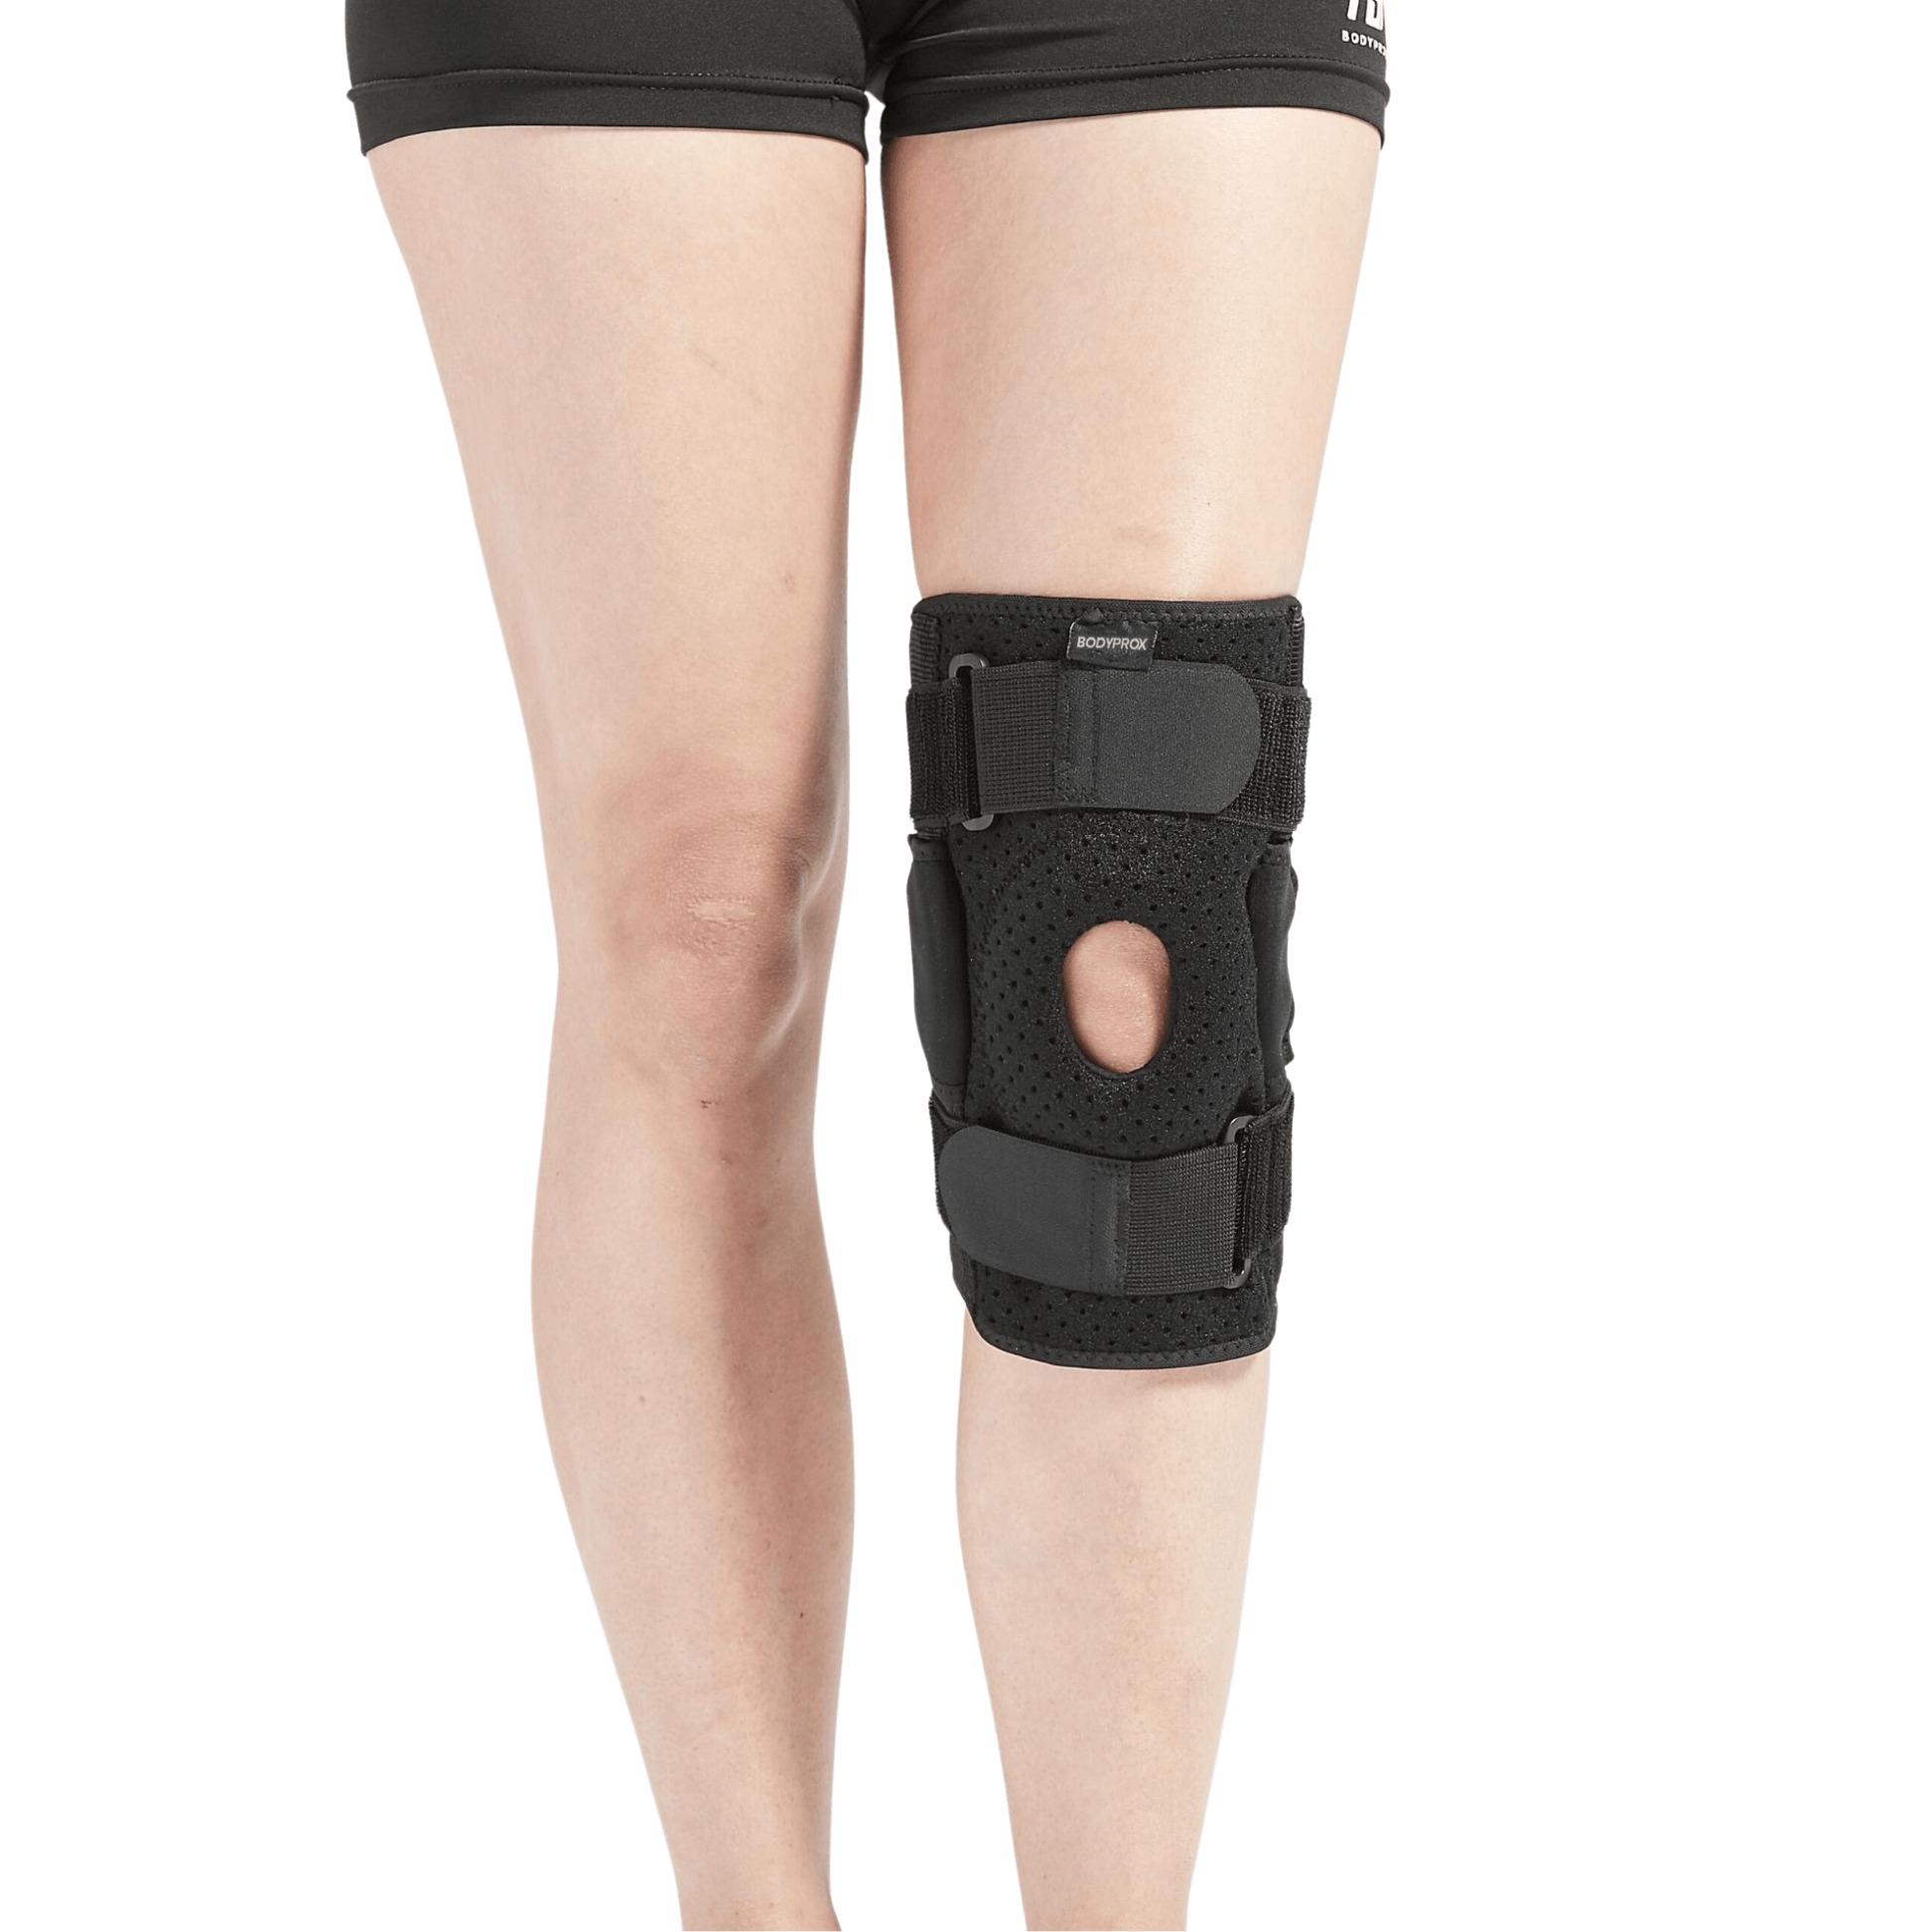 Knee Braces : Buy Knee Brace & Support Online in Canada at Best